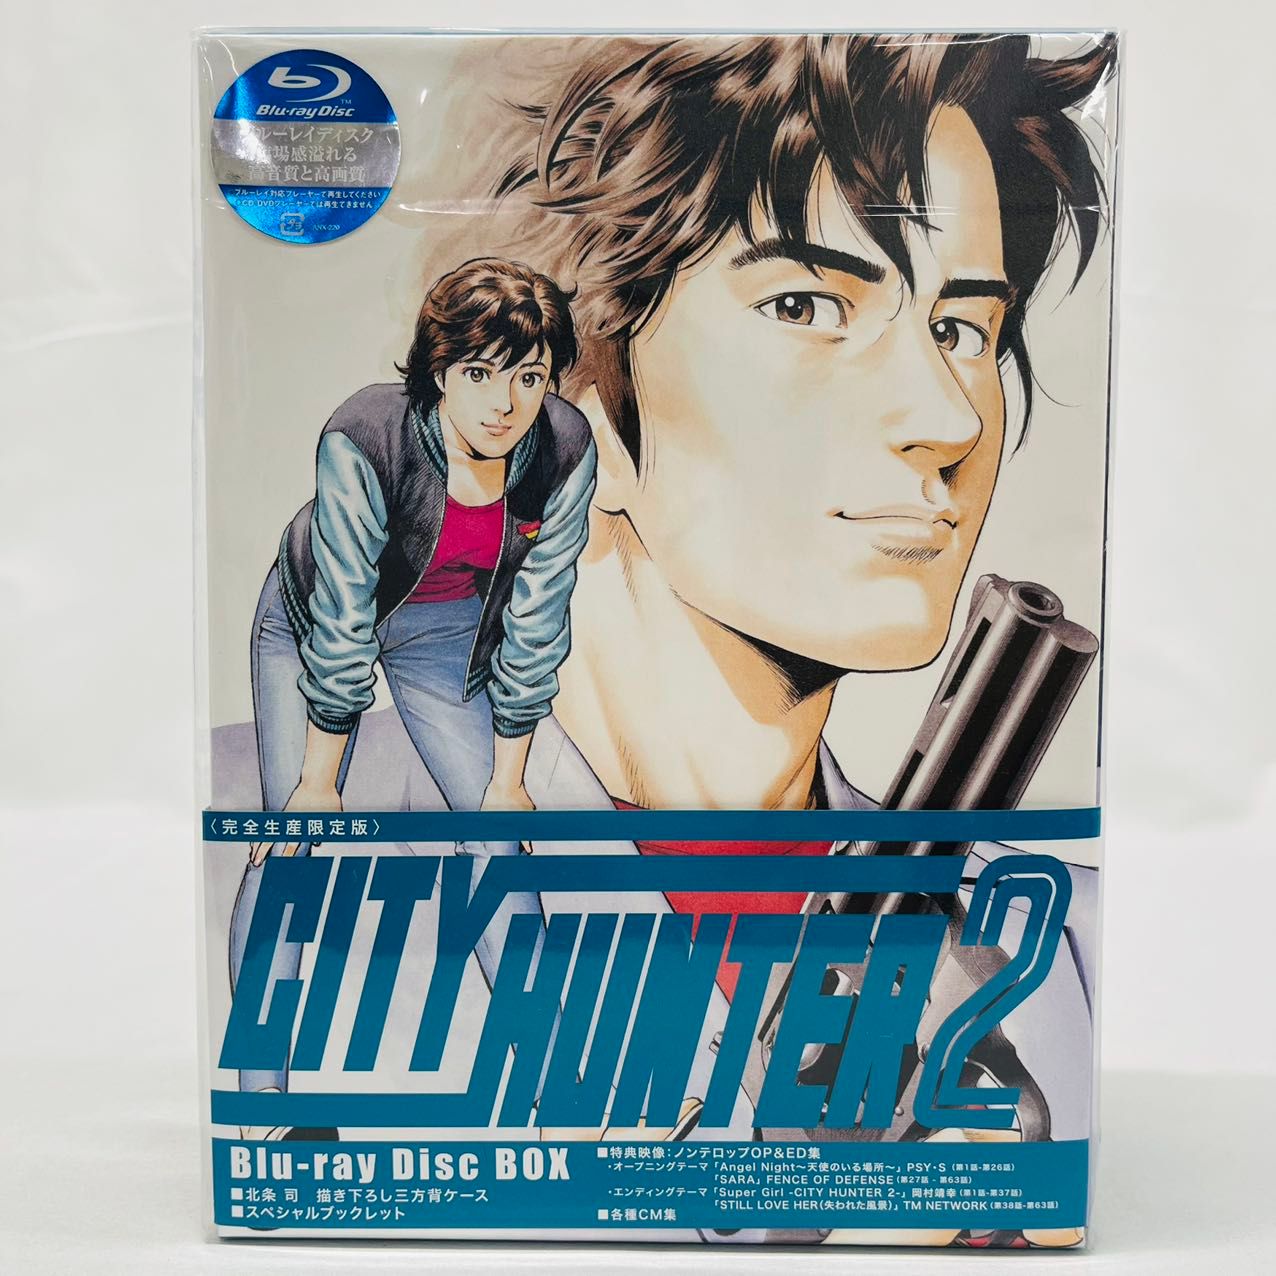 CITY HUNTER 2 Blu-ray Disc BOX 完全生産限定版 ANZX-14911/8 - お